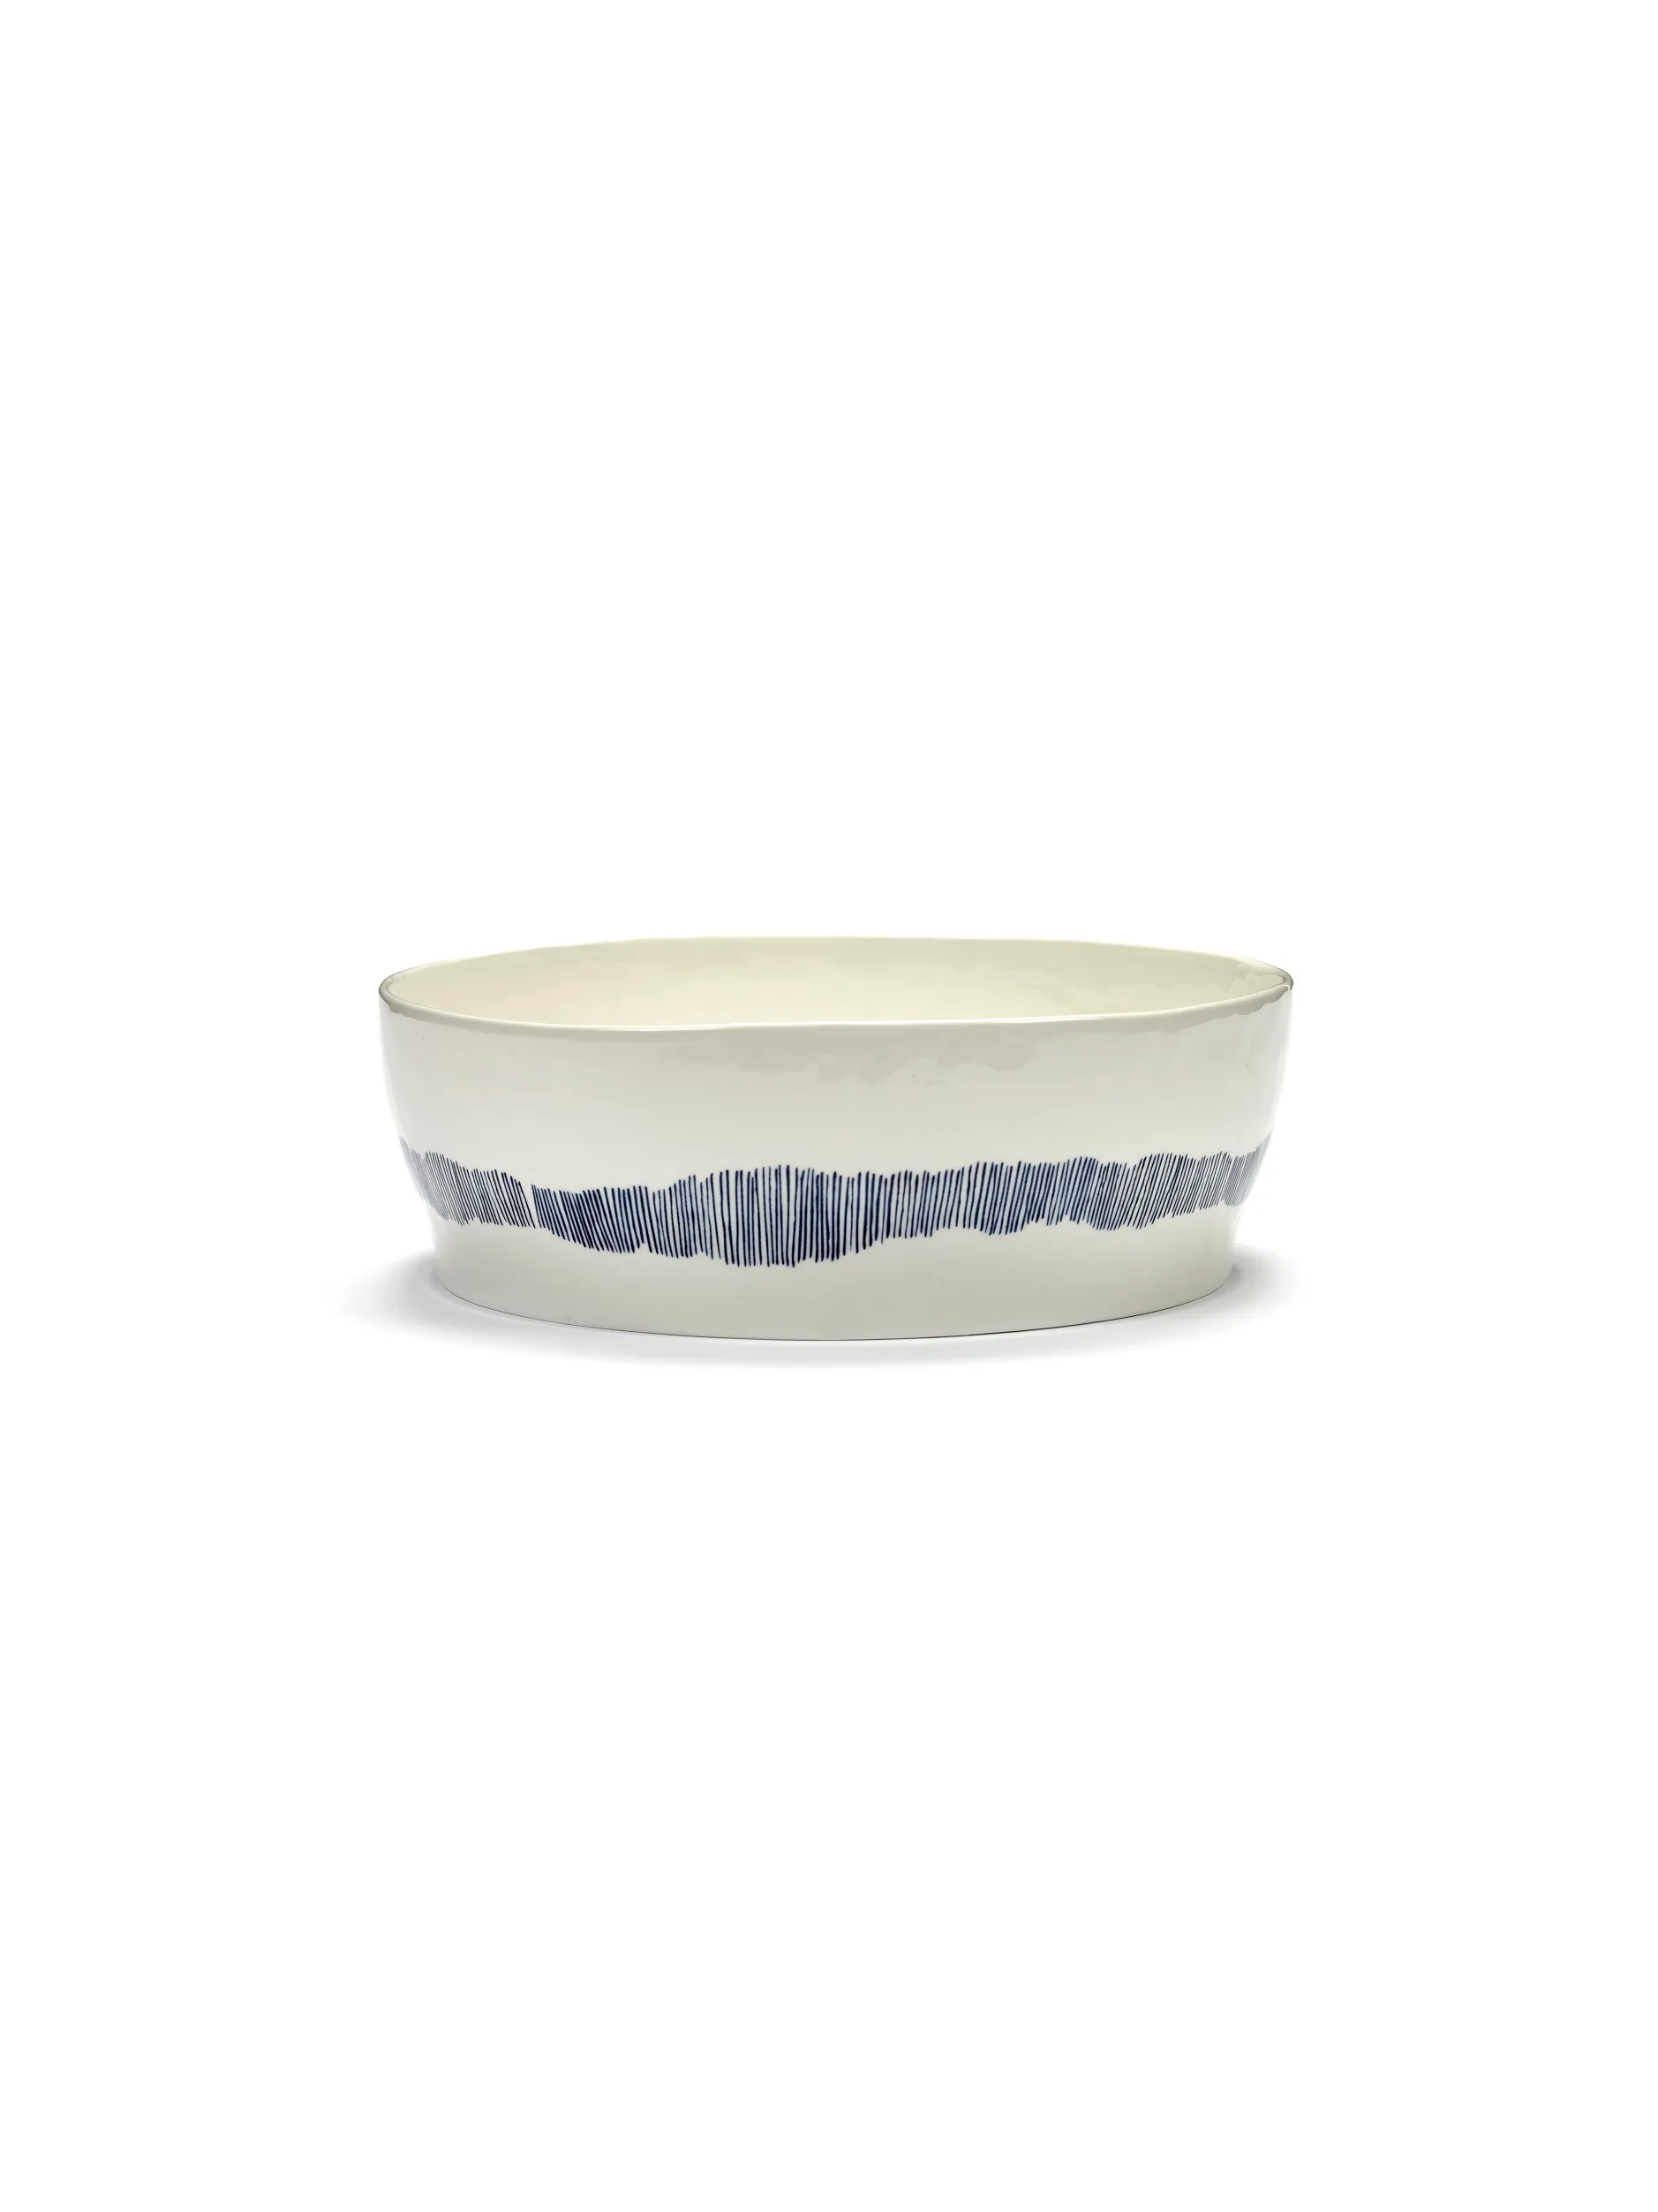 Salad Bowl White-Stripes Blue Feast Ottolenghi by Serax L 28.5 W 28.5 H 9.5 CM